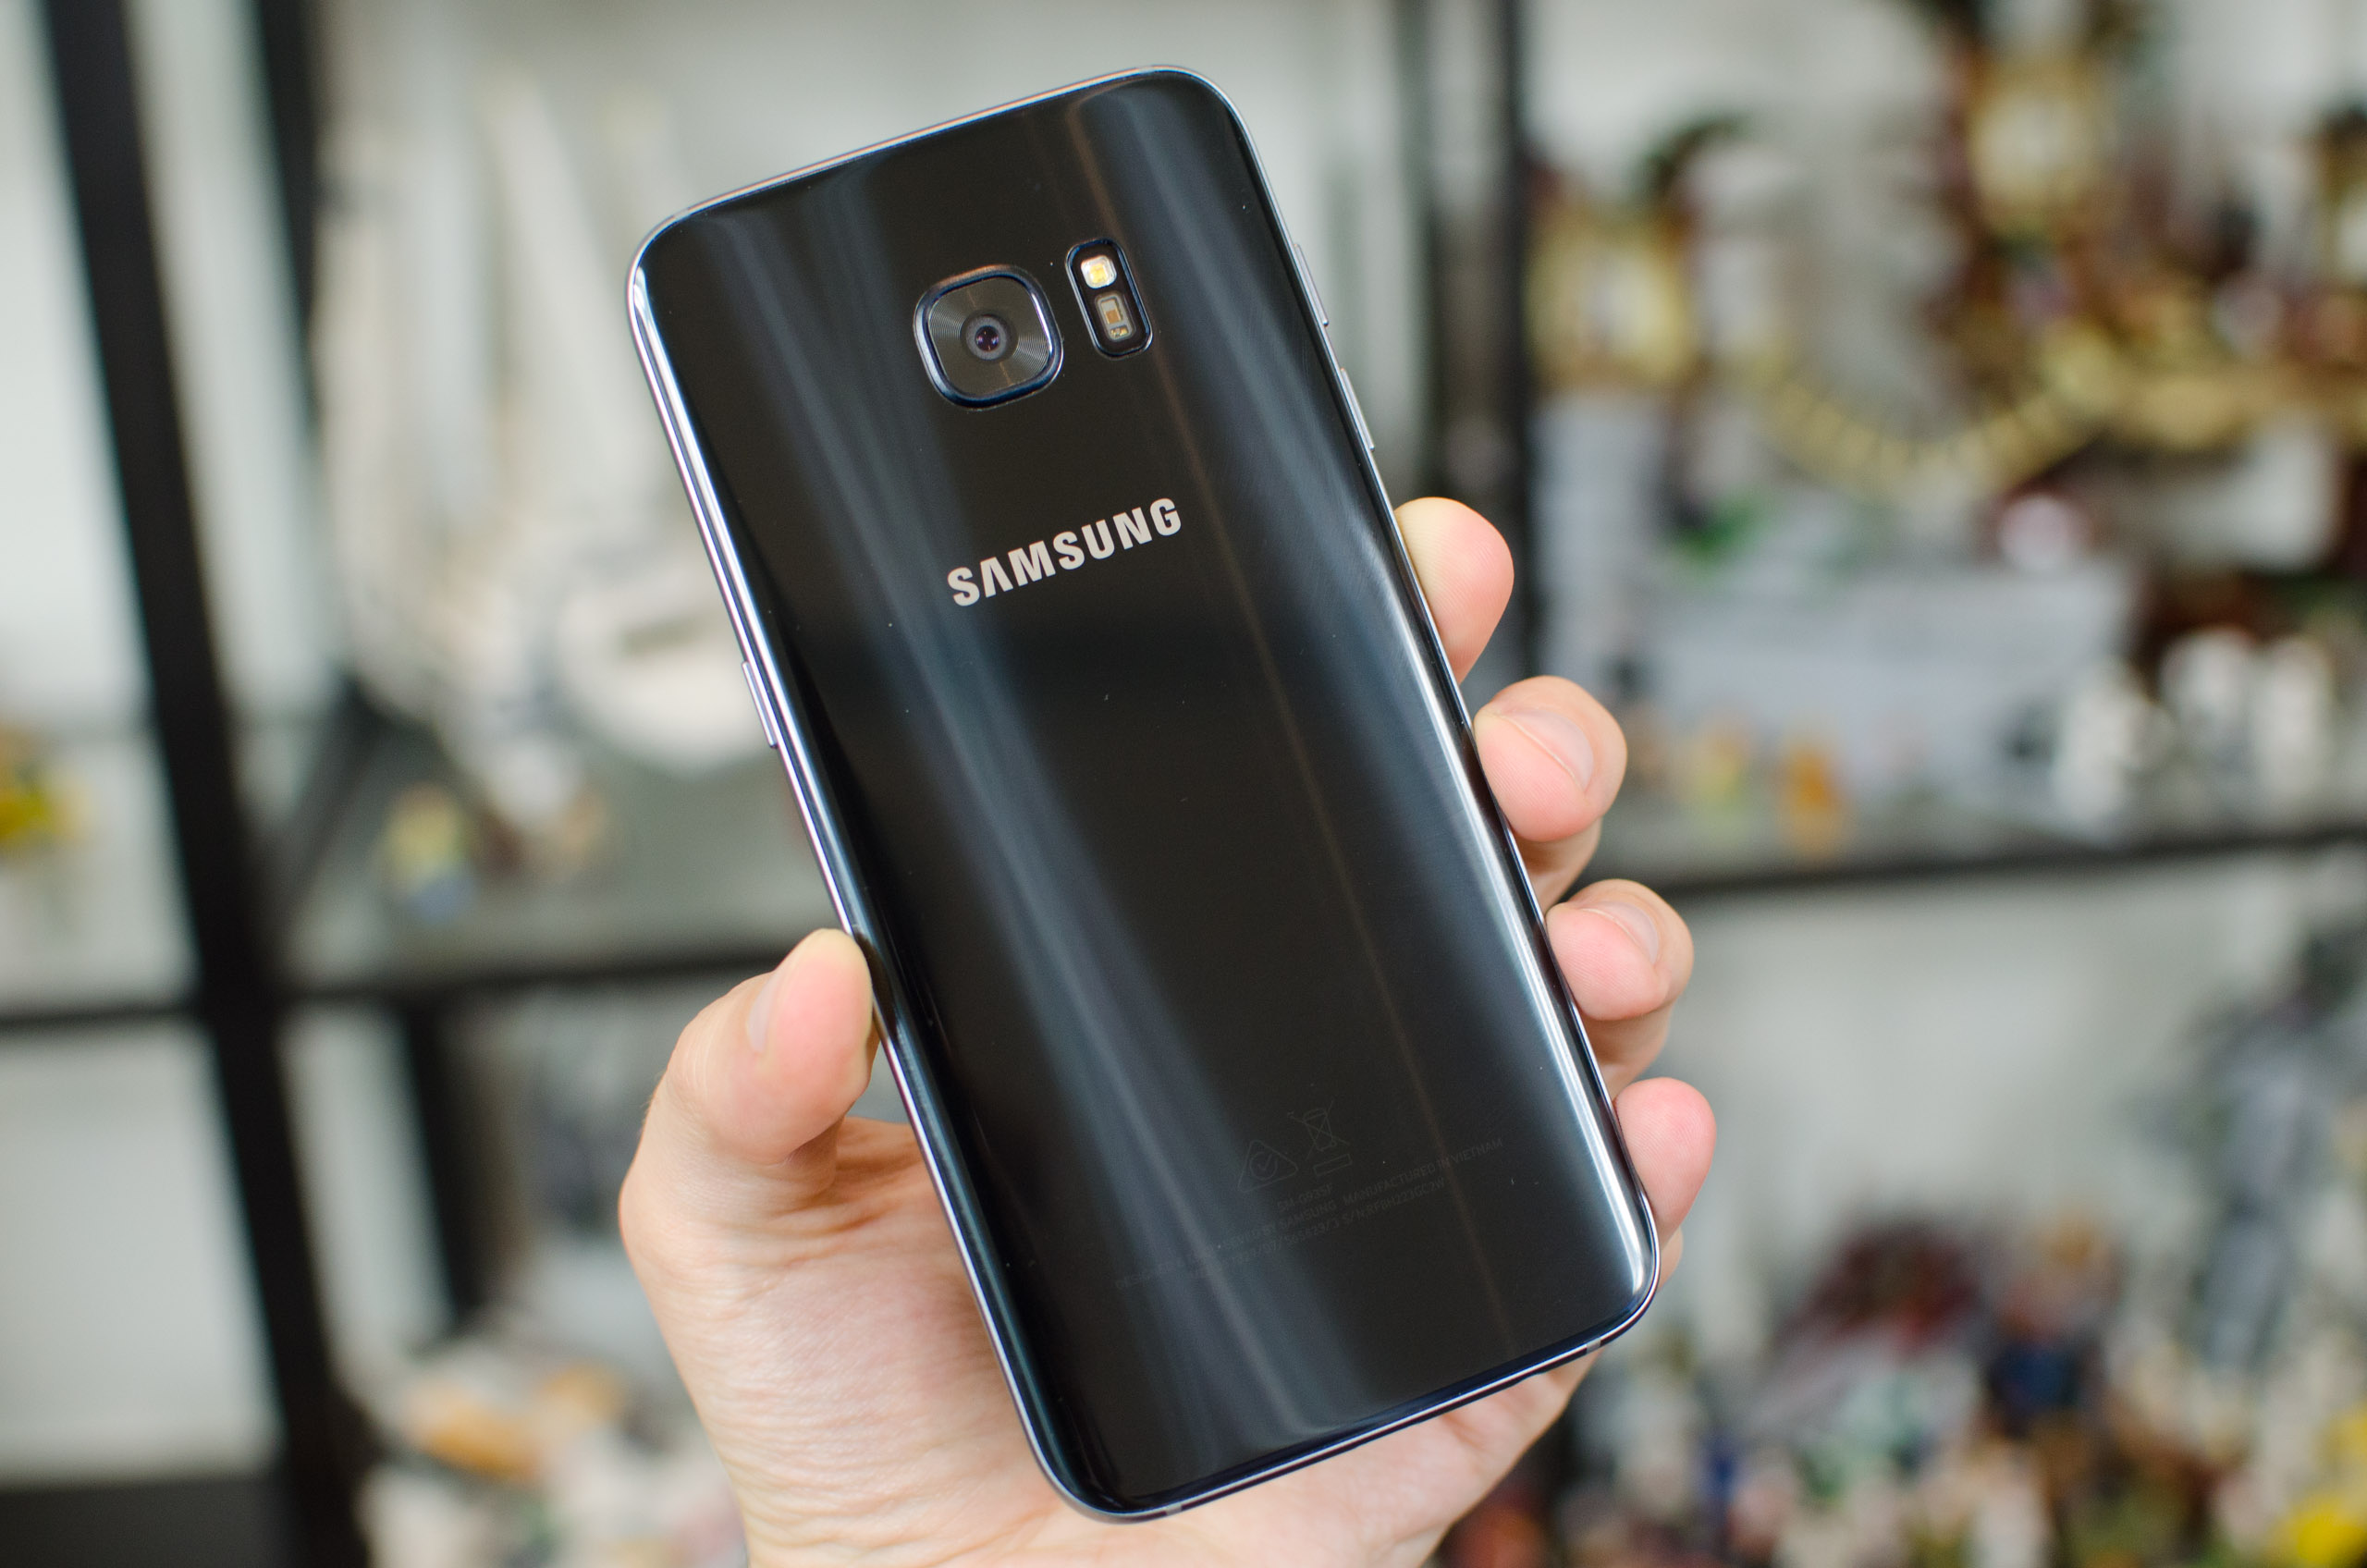 cassette Automatisering Lijkenhuis Samsung Galaxy S7 Edge Review | TechSpot